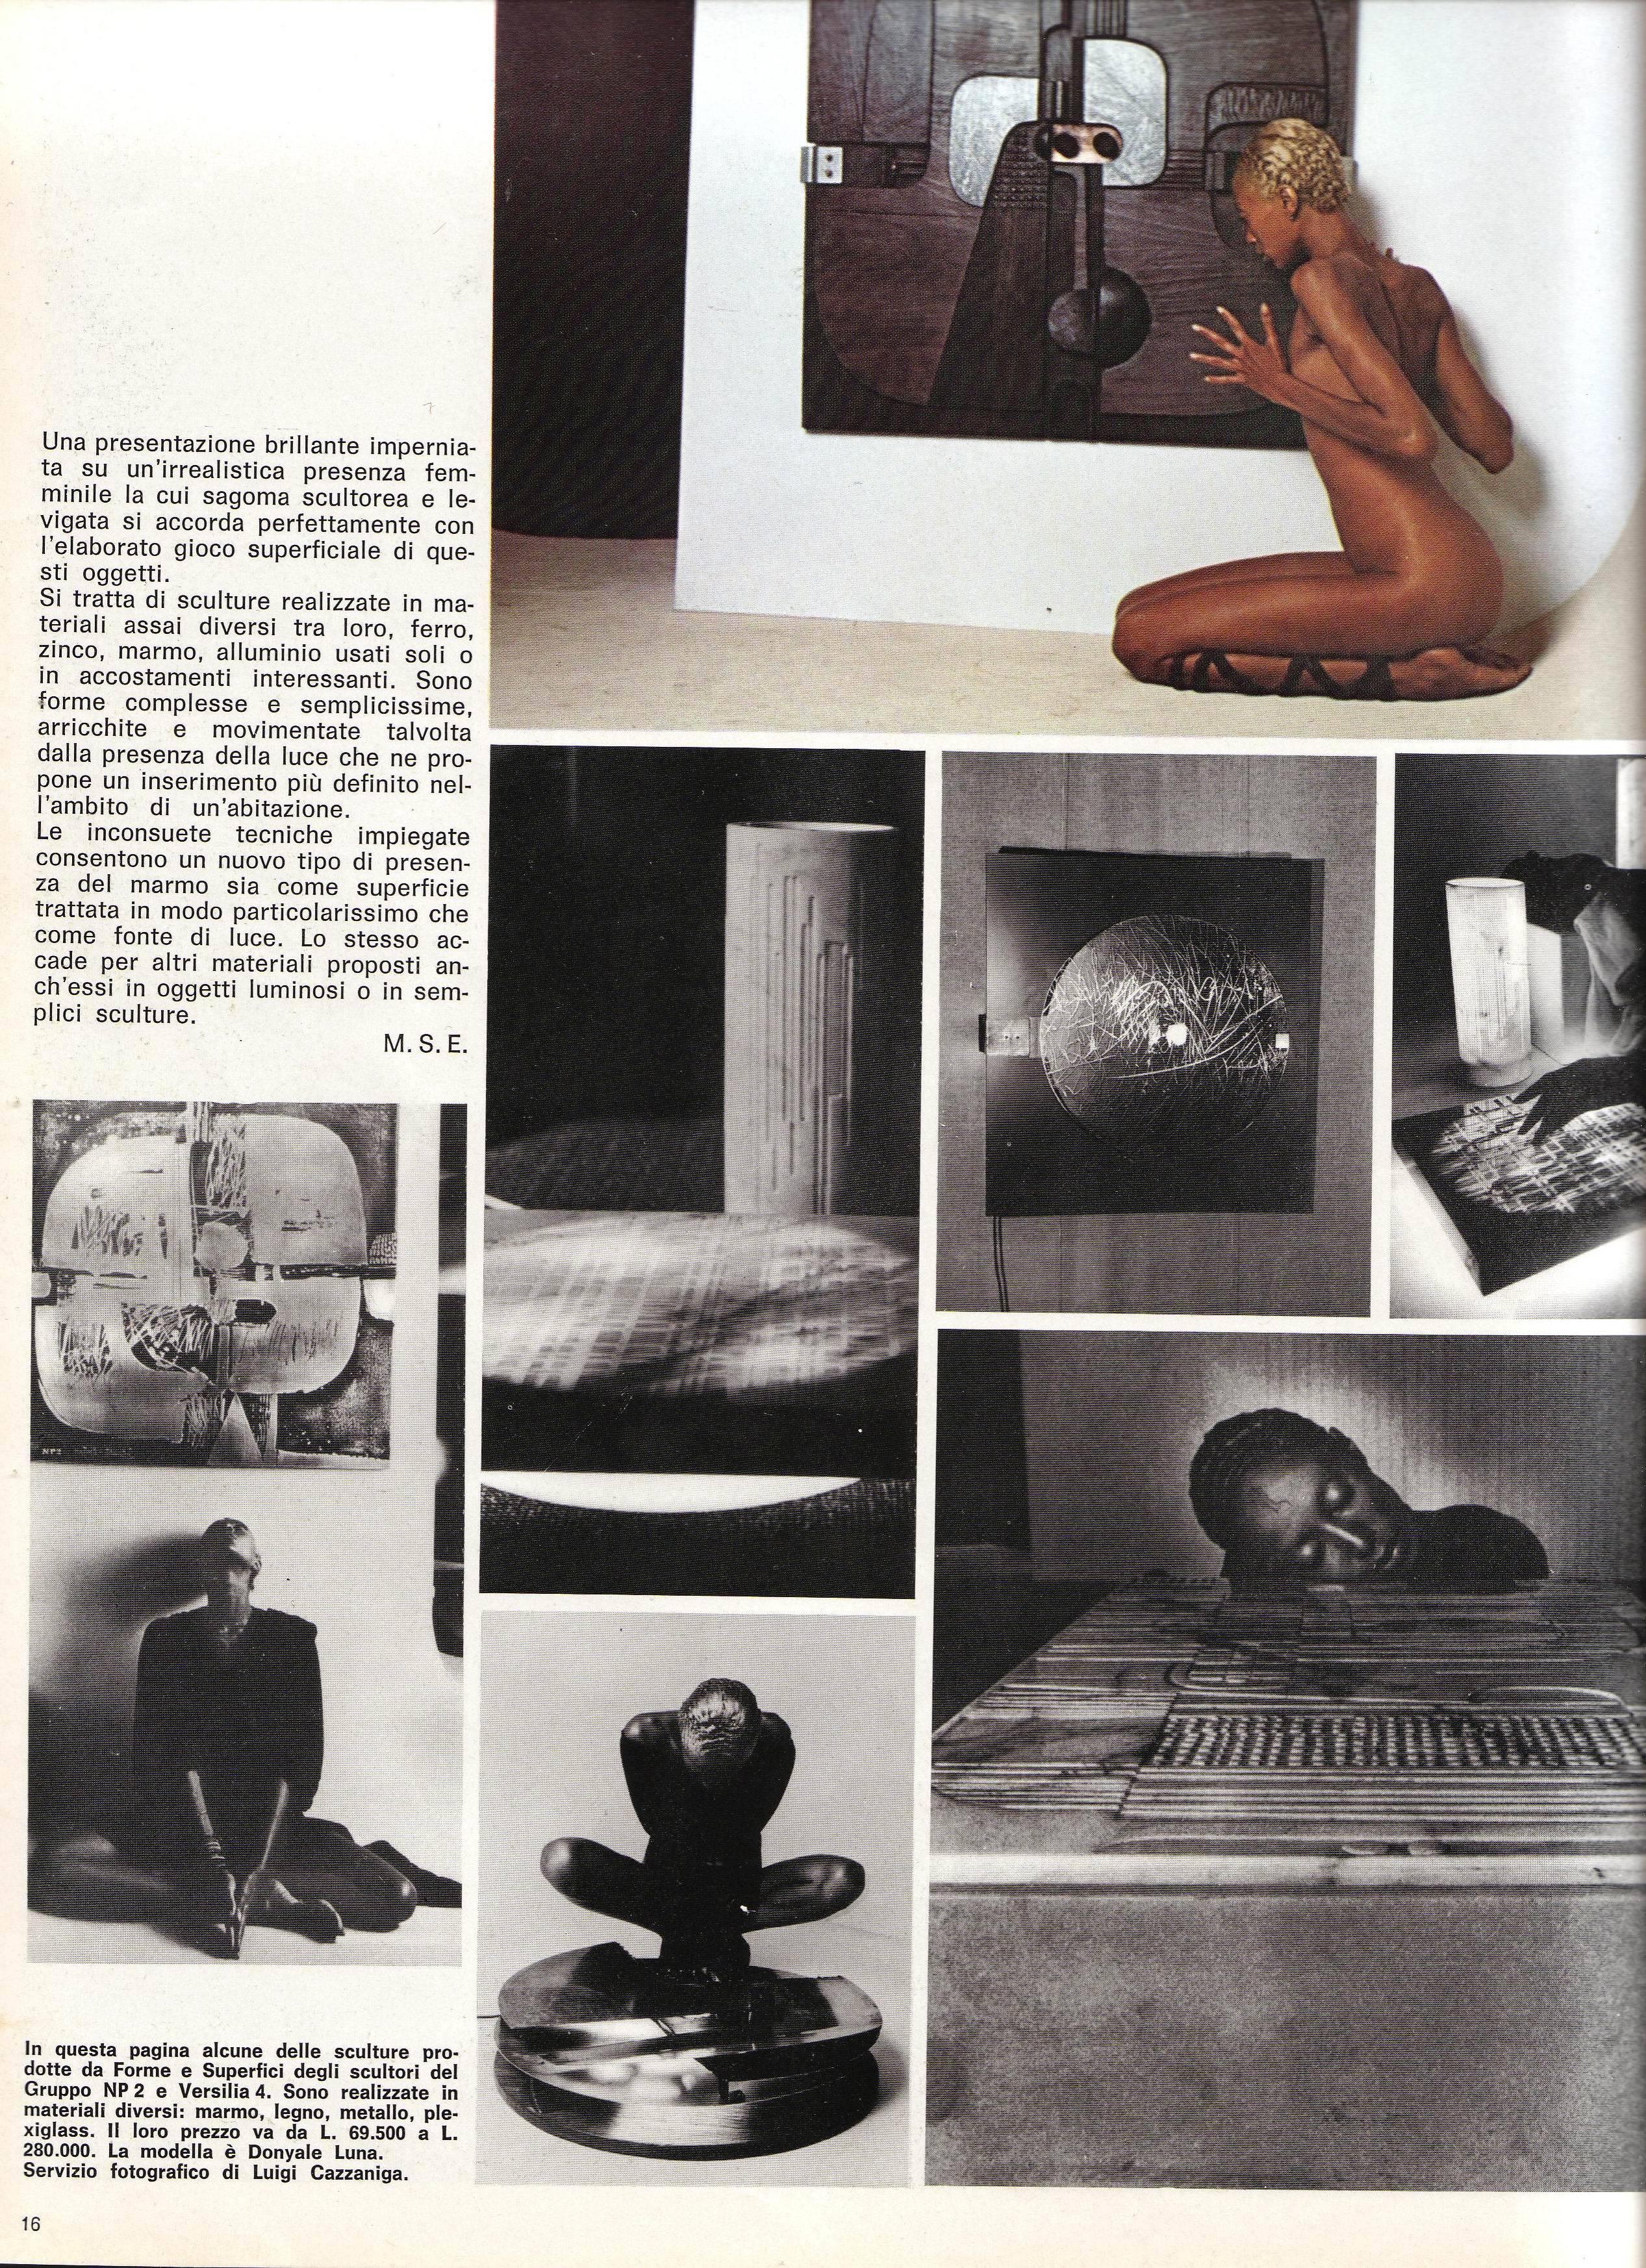 Steel Nerone and Patuzzi 'Elemento Luminose', 1970, Signed, Published, Original Label For Sale